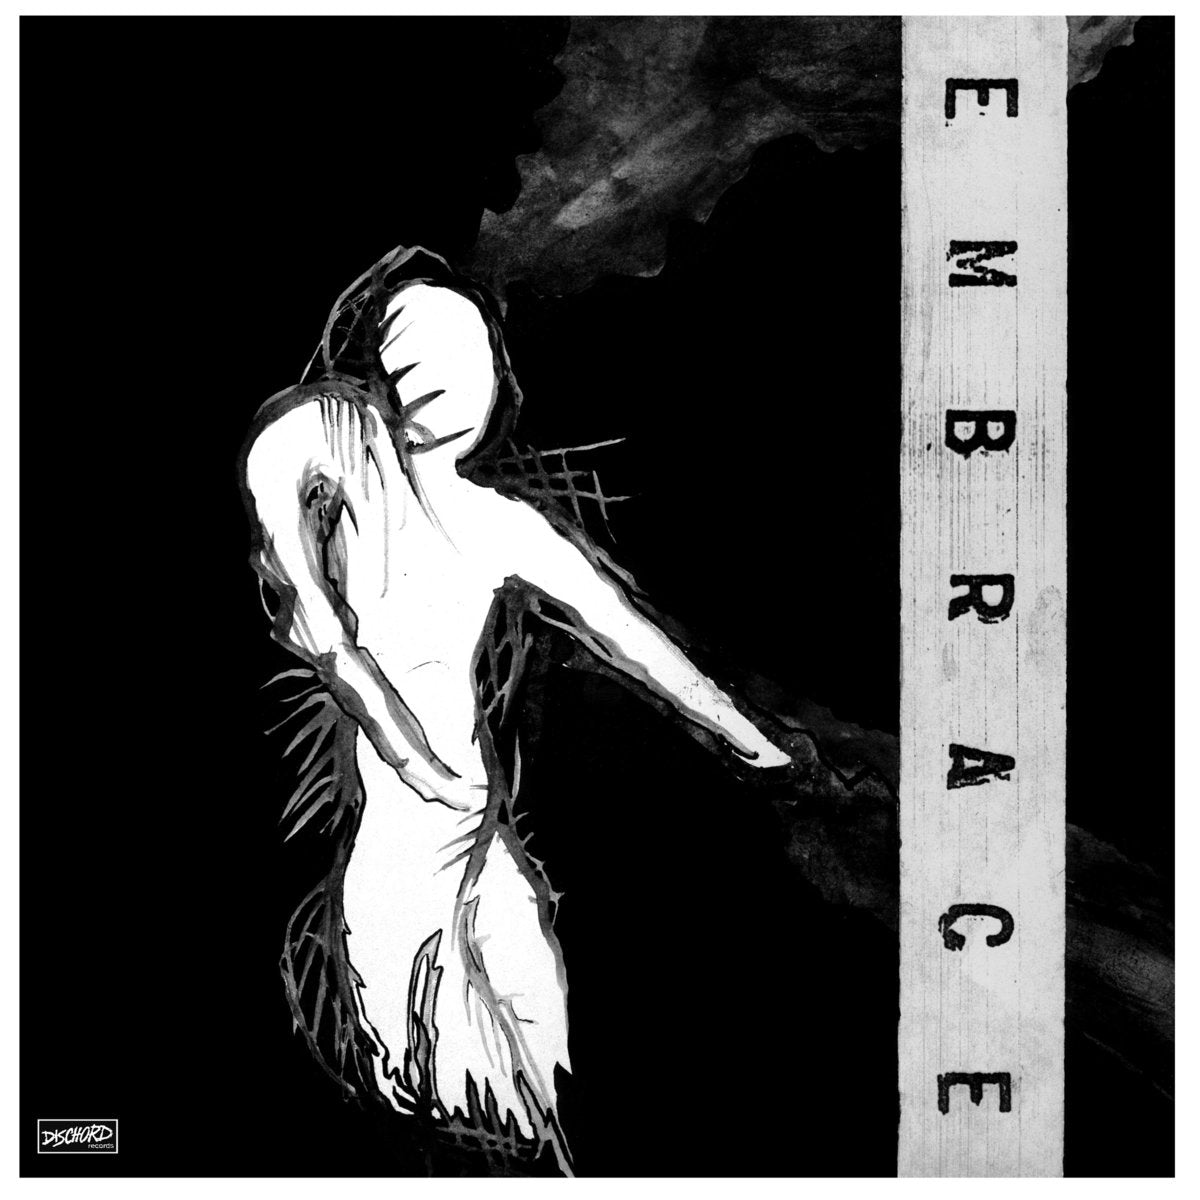 EMBRACE 's/t' LP / COLORED EDITION & BLACK EDITION